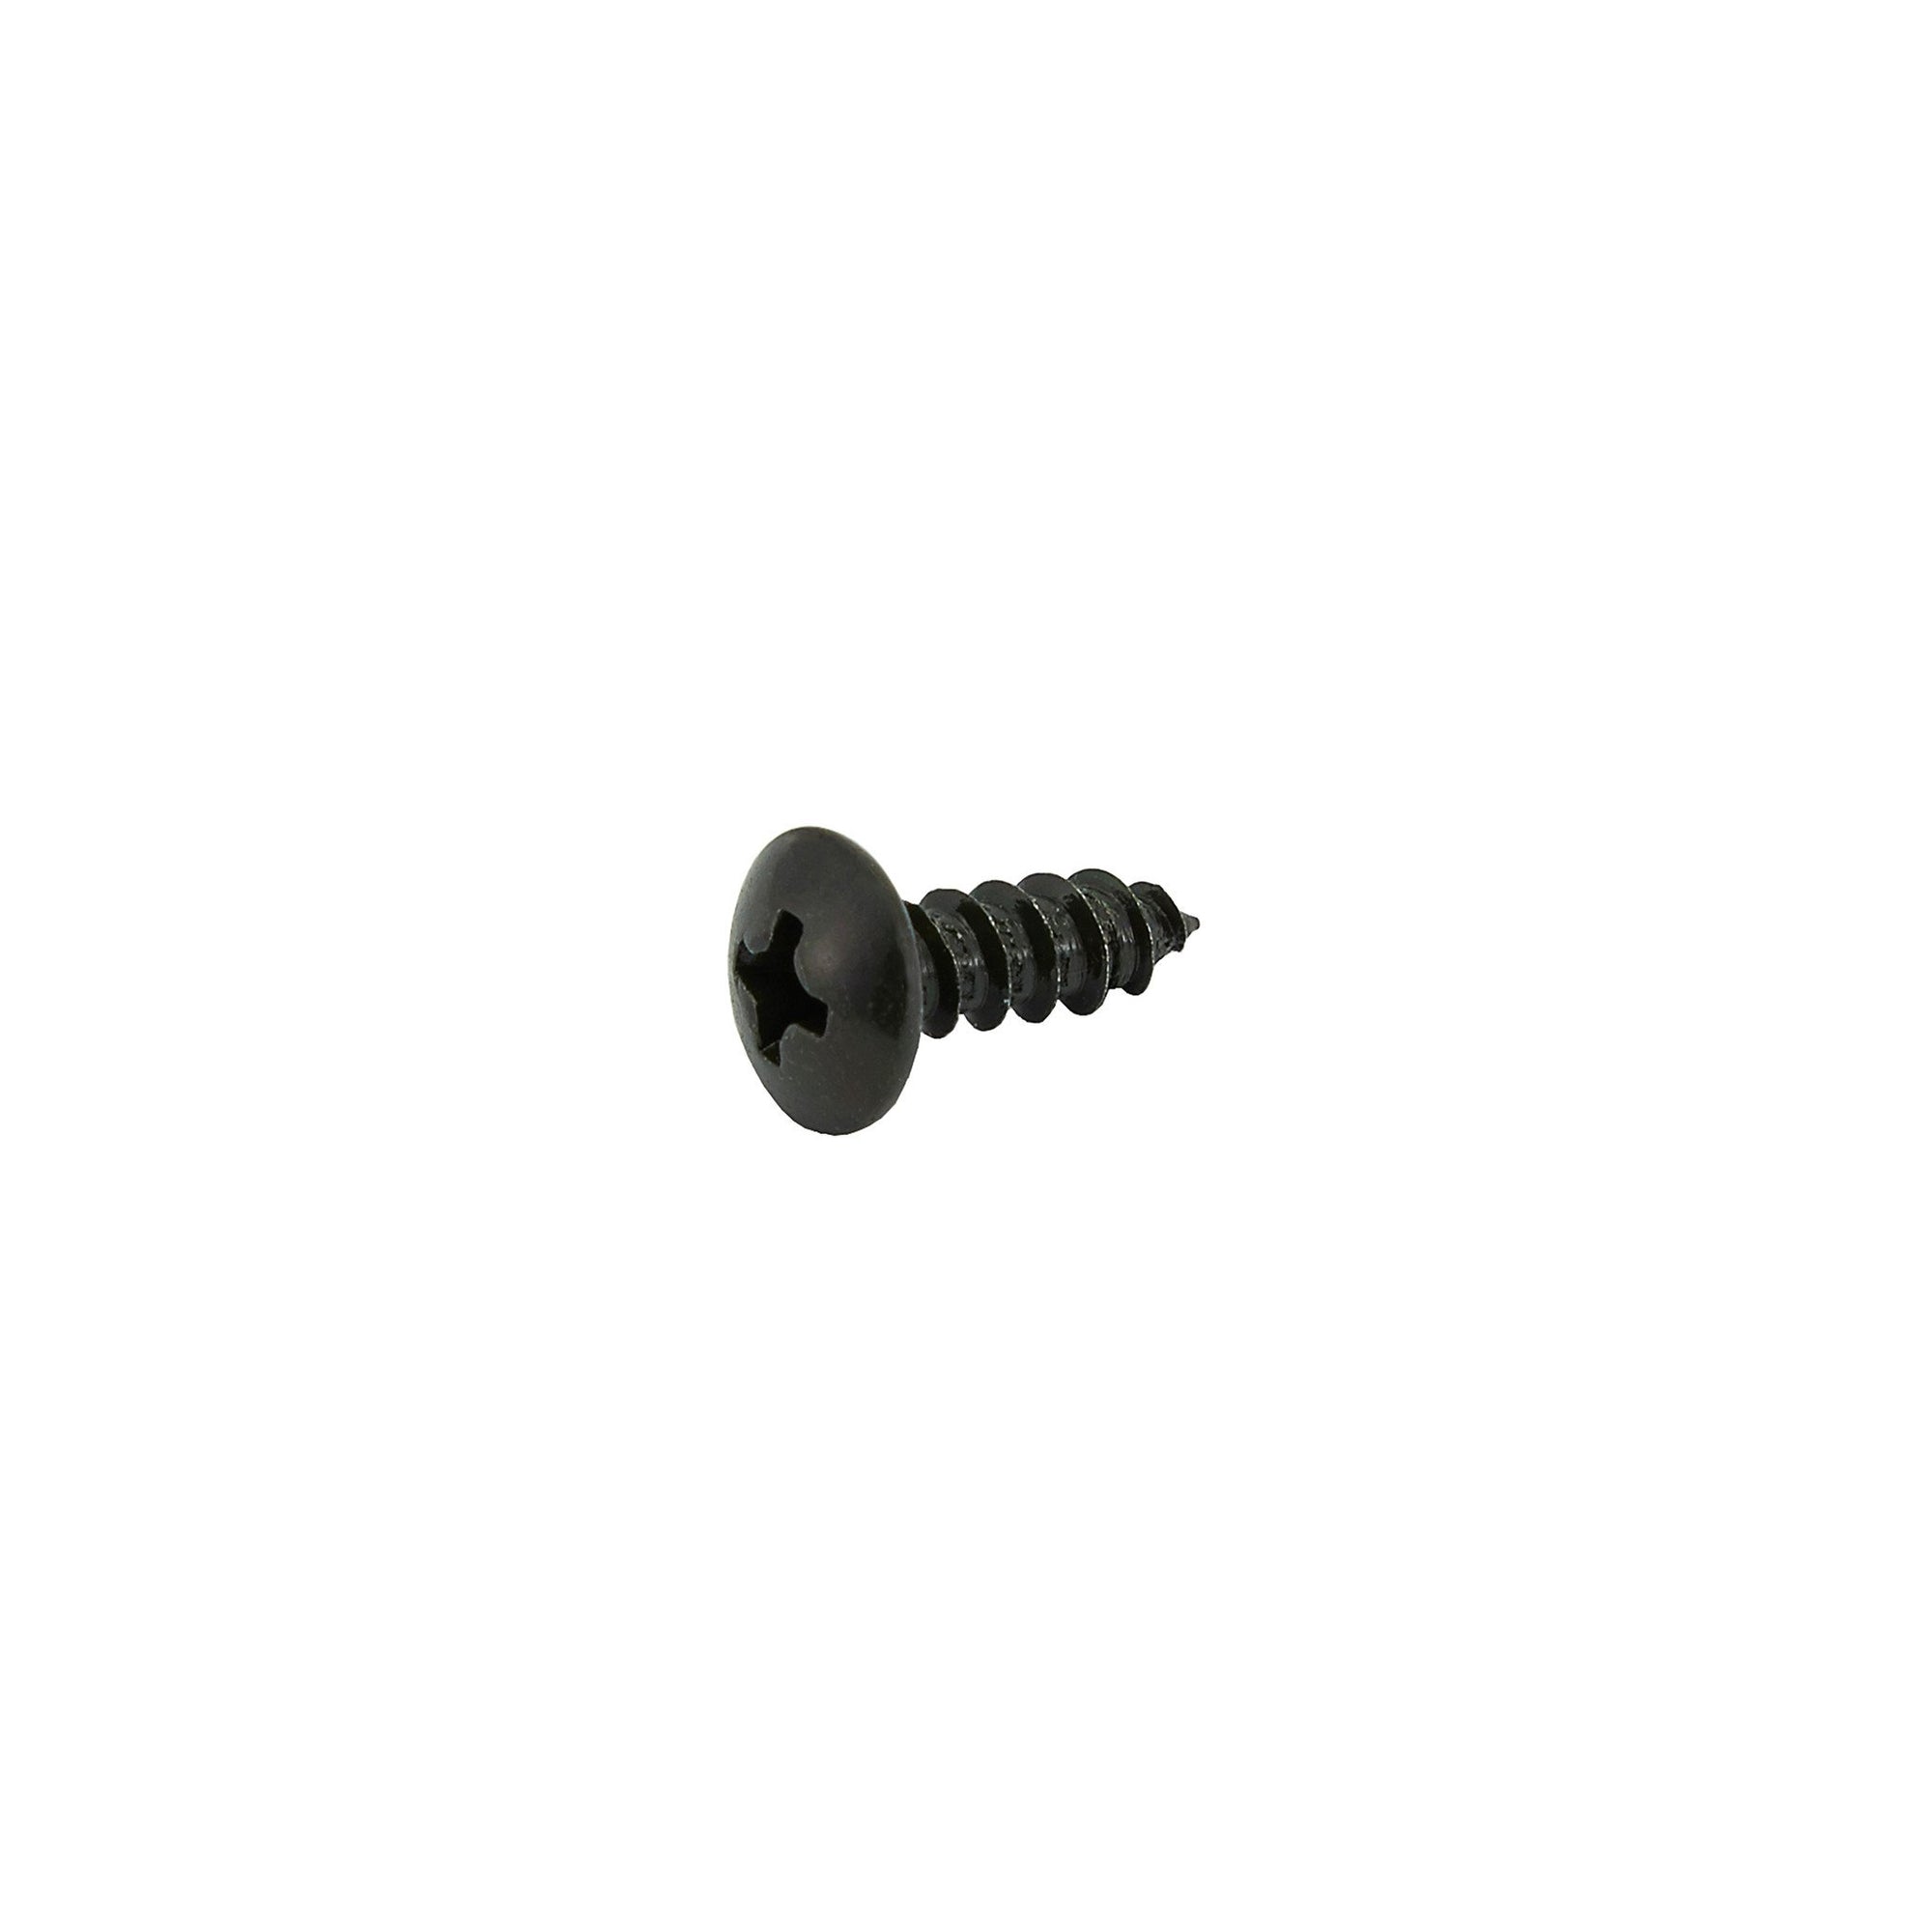 Speaker fixing screws 3.5 x12mm pan head PH2. Pack of 8. Top quality. - Willys-Hifi Ltd